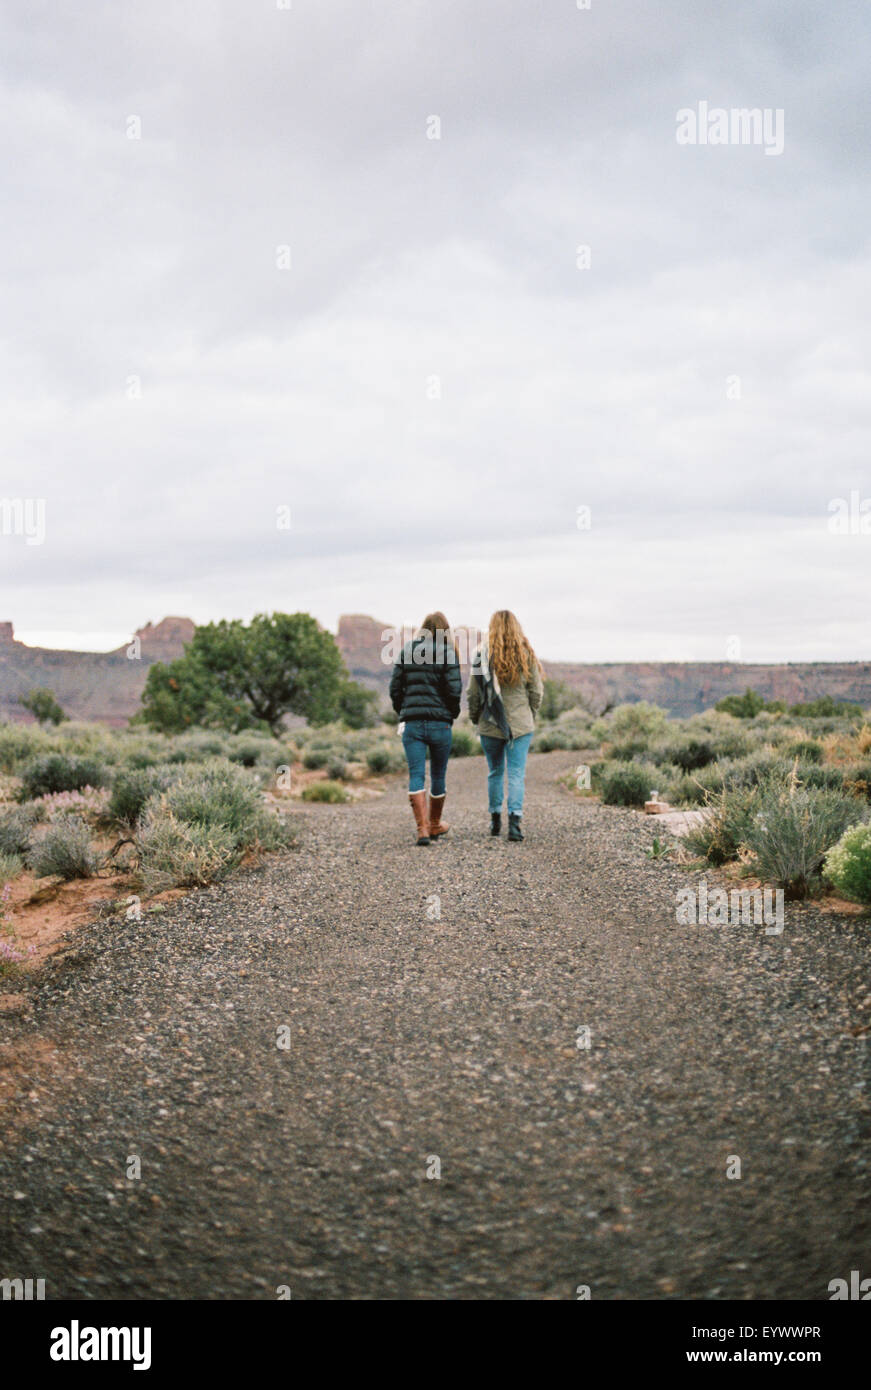 Two women walk down a dirt road in a desert. Stock Photo